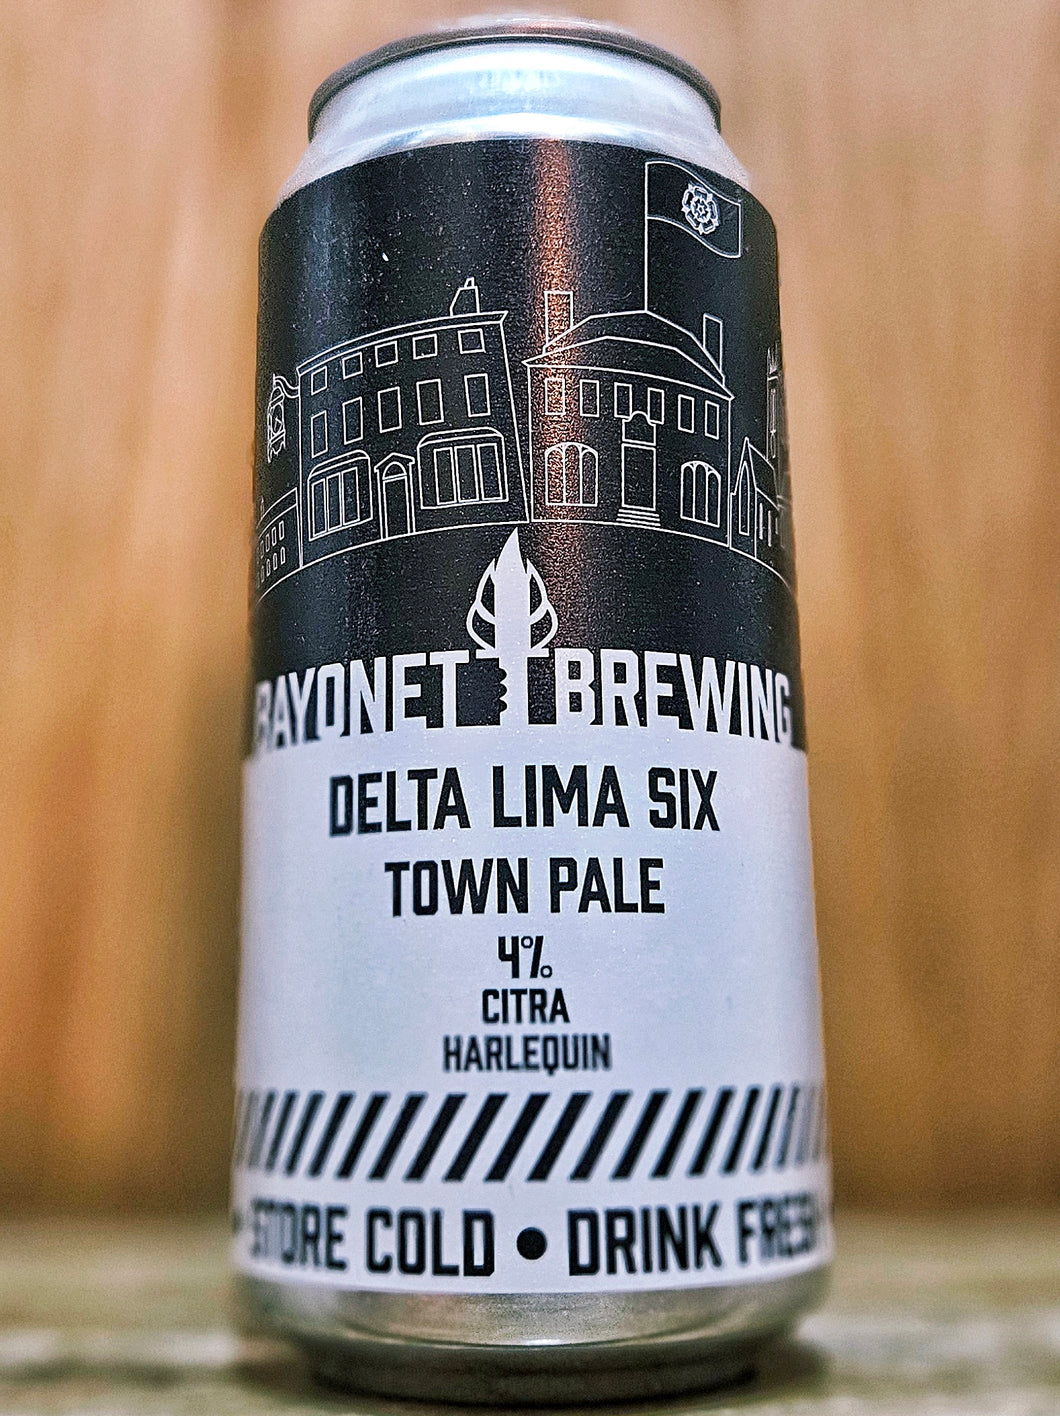 Bayonet Brewing - Delta Lime Six